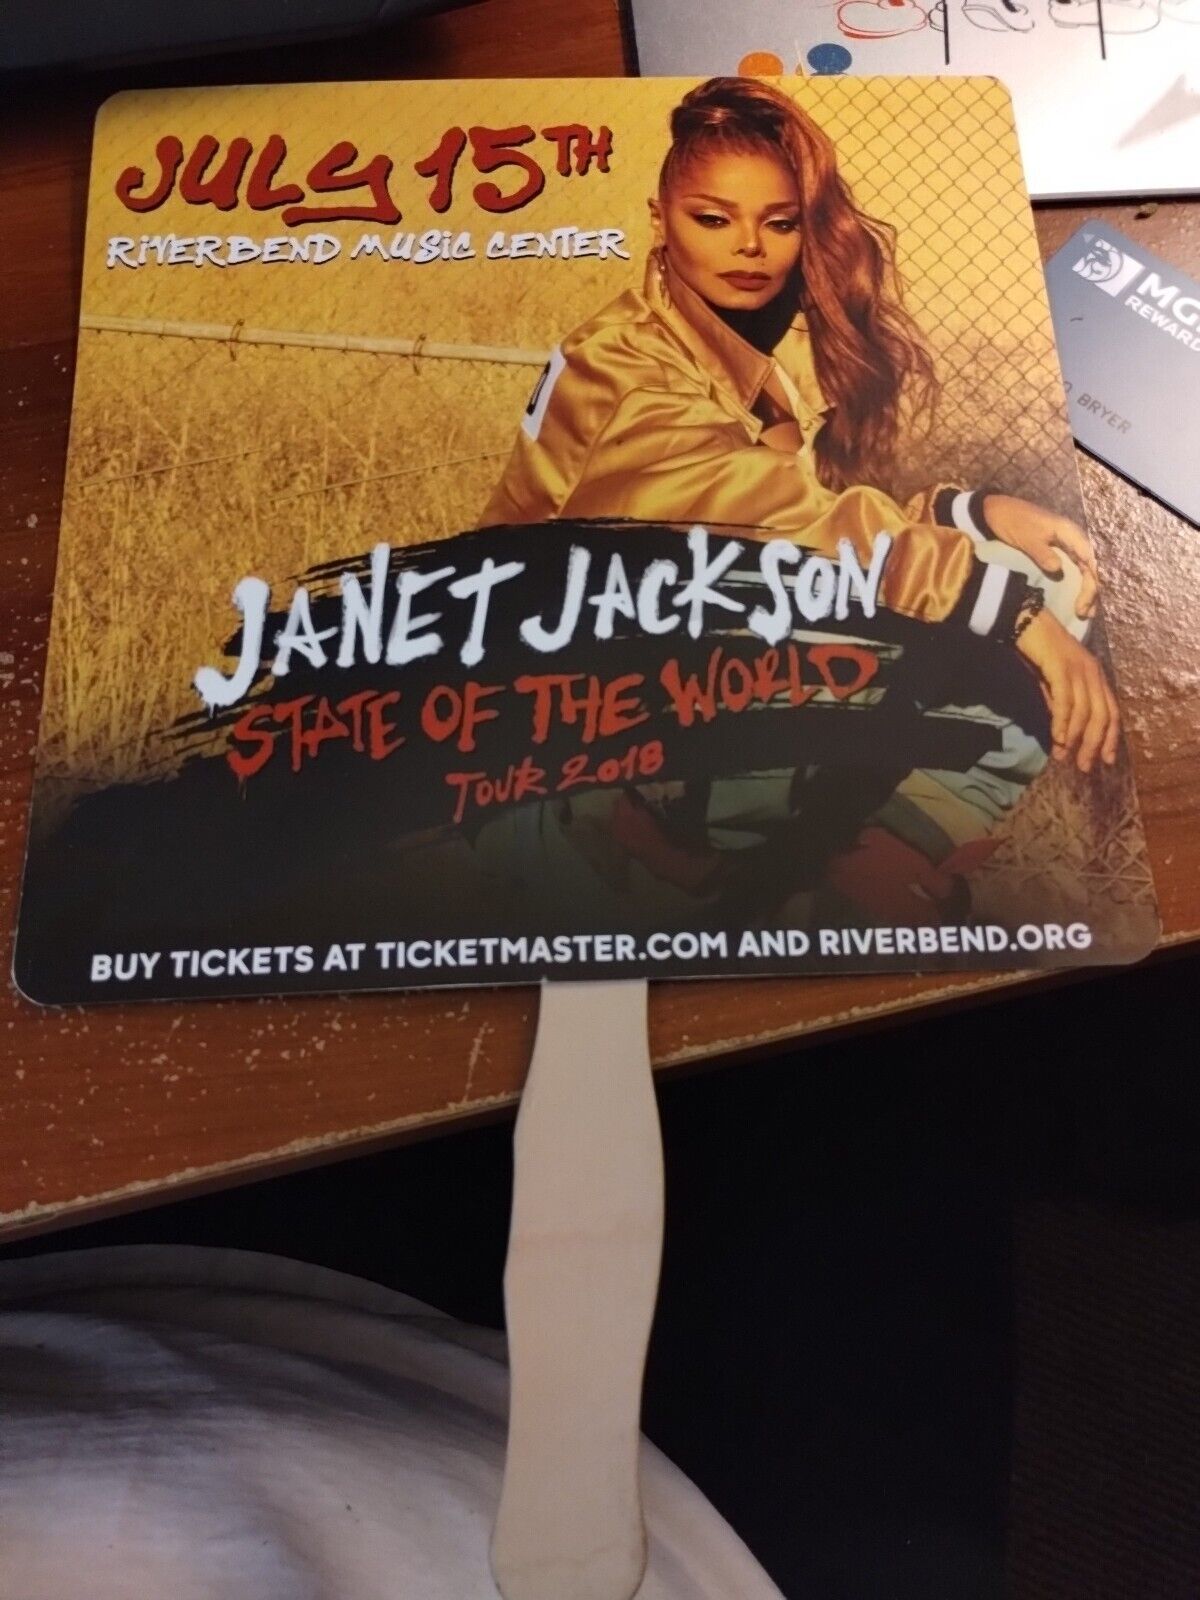 Janet Jackson Fan River Bend Music Center